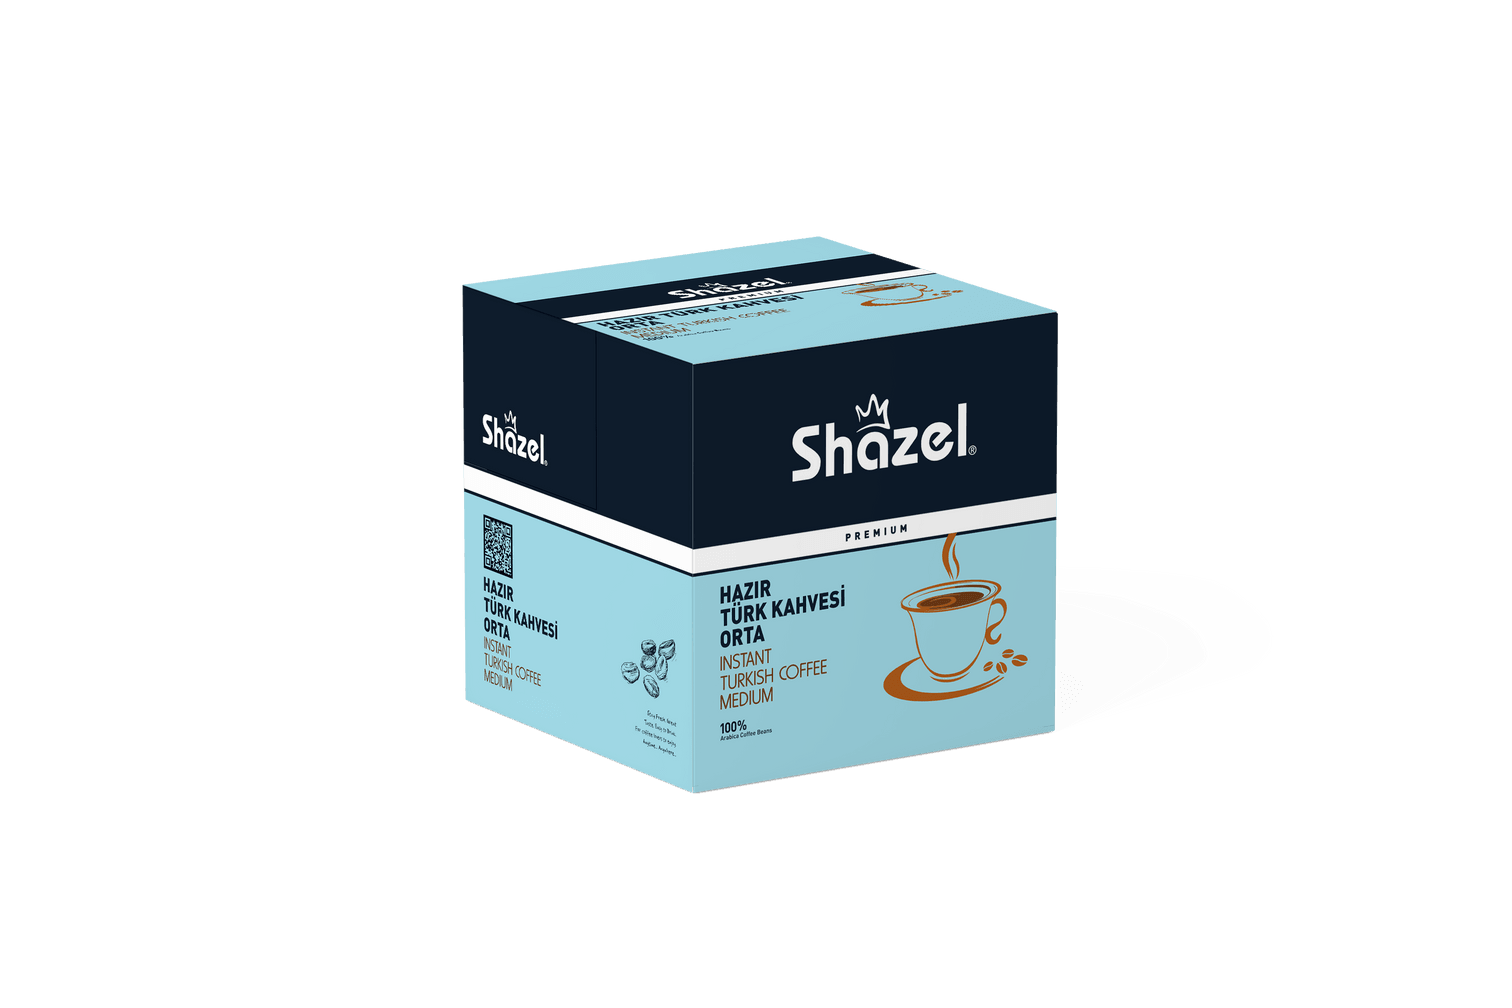 Shazel Instant Turkish Coffee Medium 9g 12 pieces 12 boxes